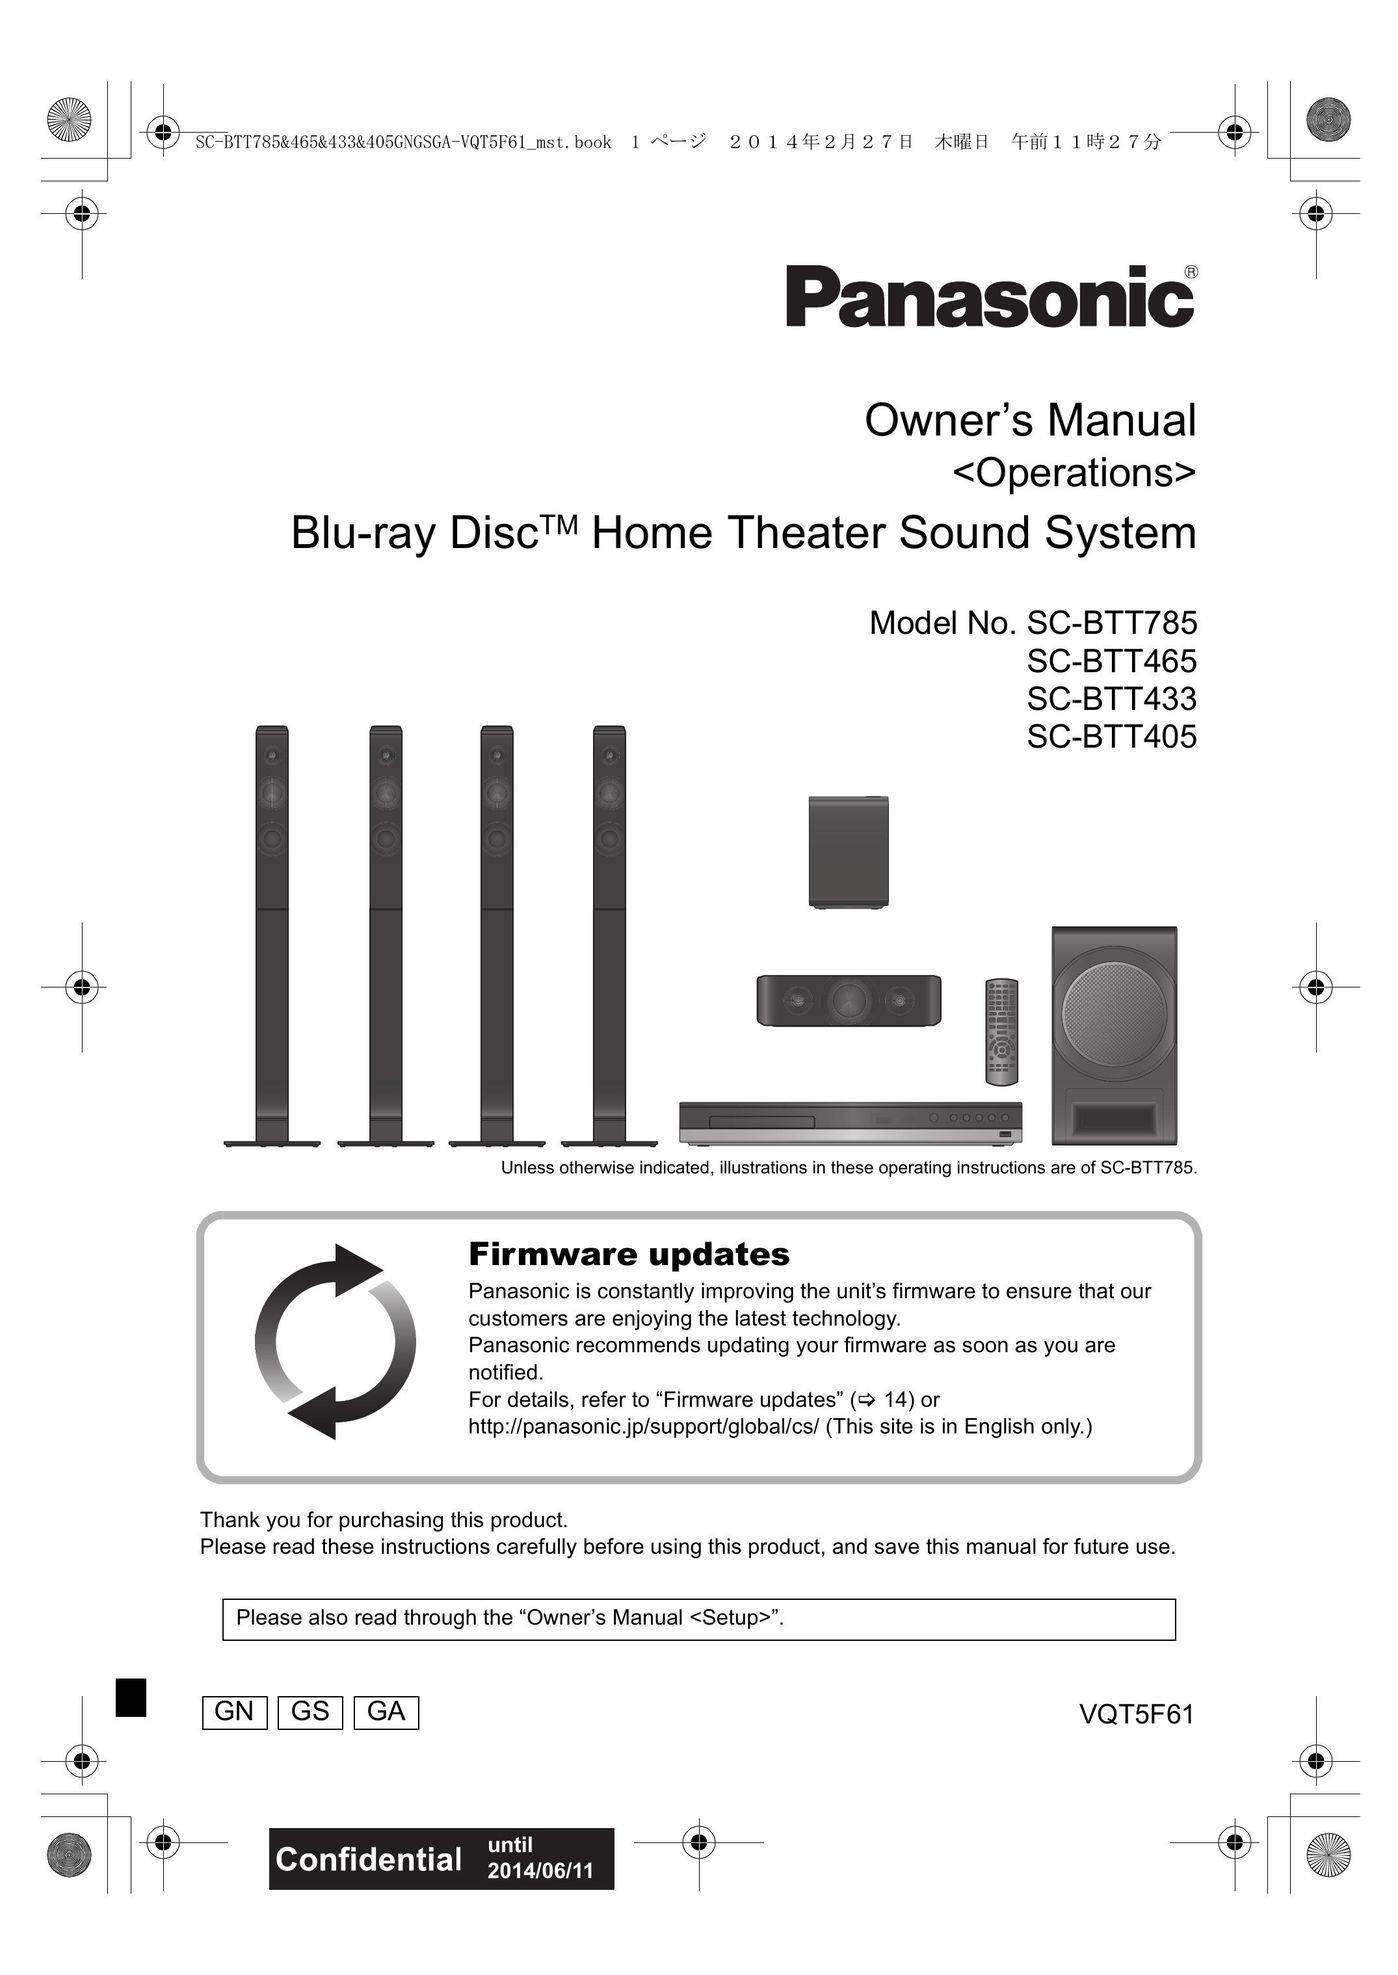 Panasonic SC-BTT433 Video Game Sound System User Manual